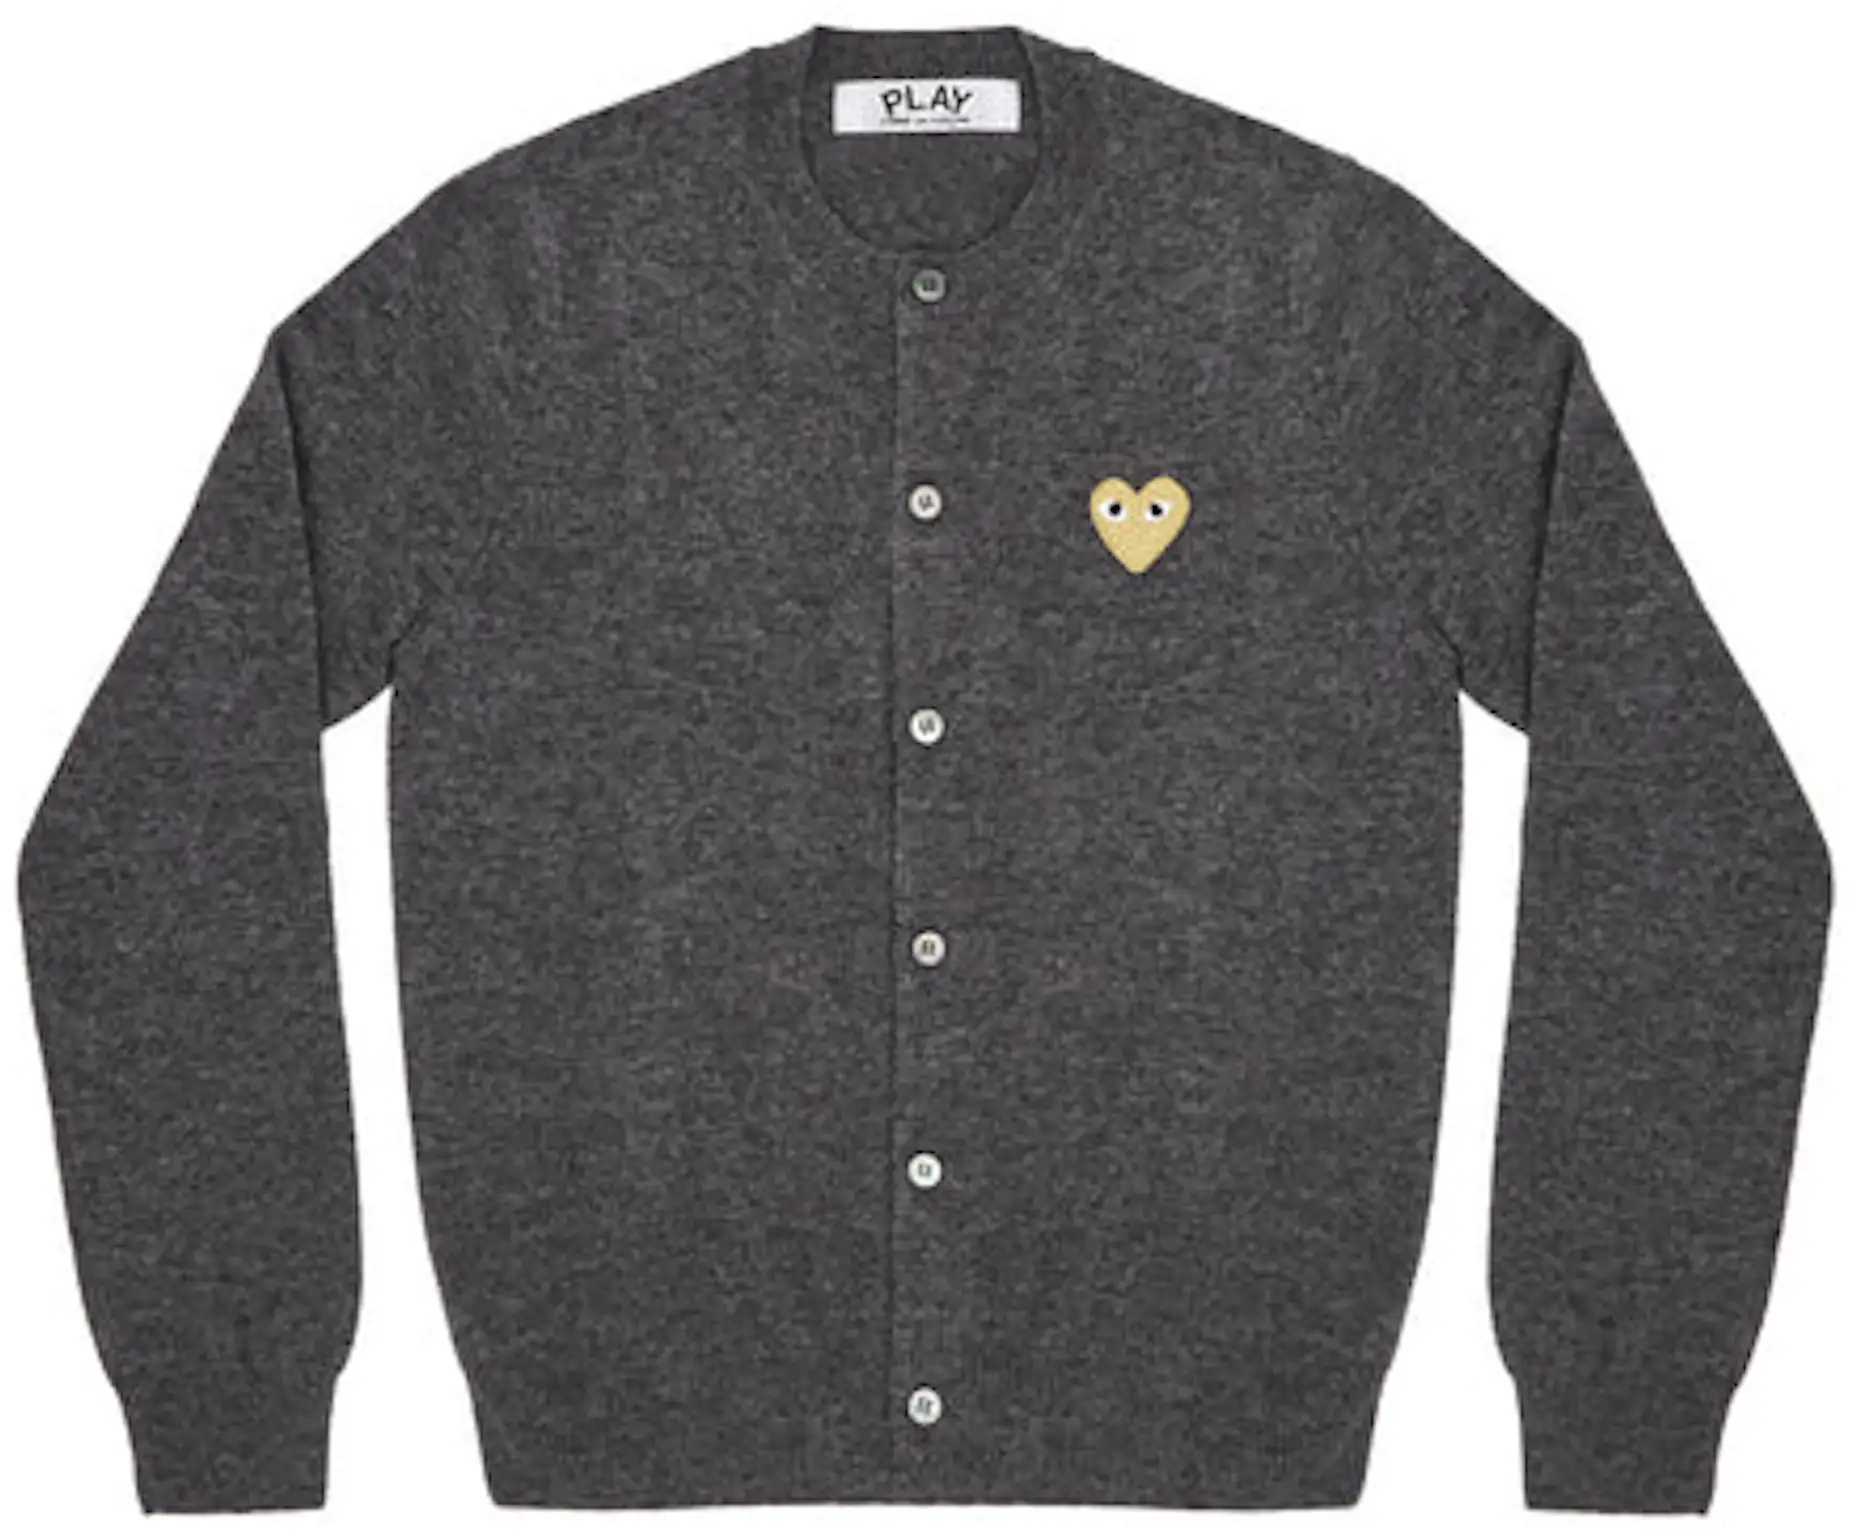 CDG Play Women's Gold Heart Knit Cardigan Sweater Grey - GB